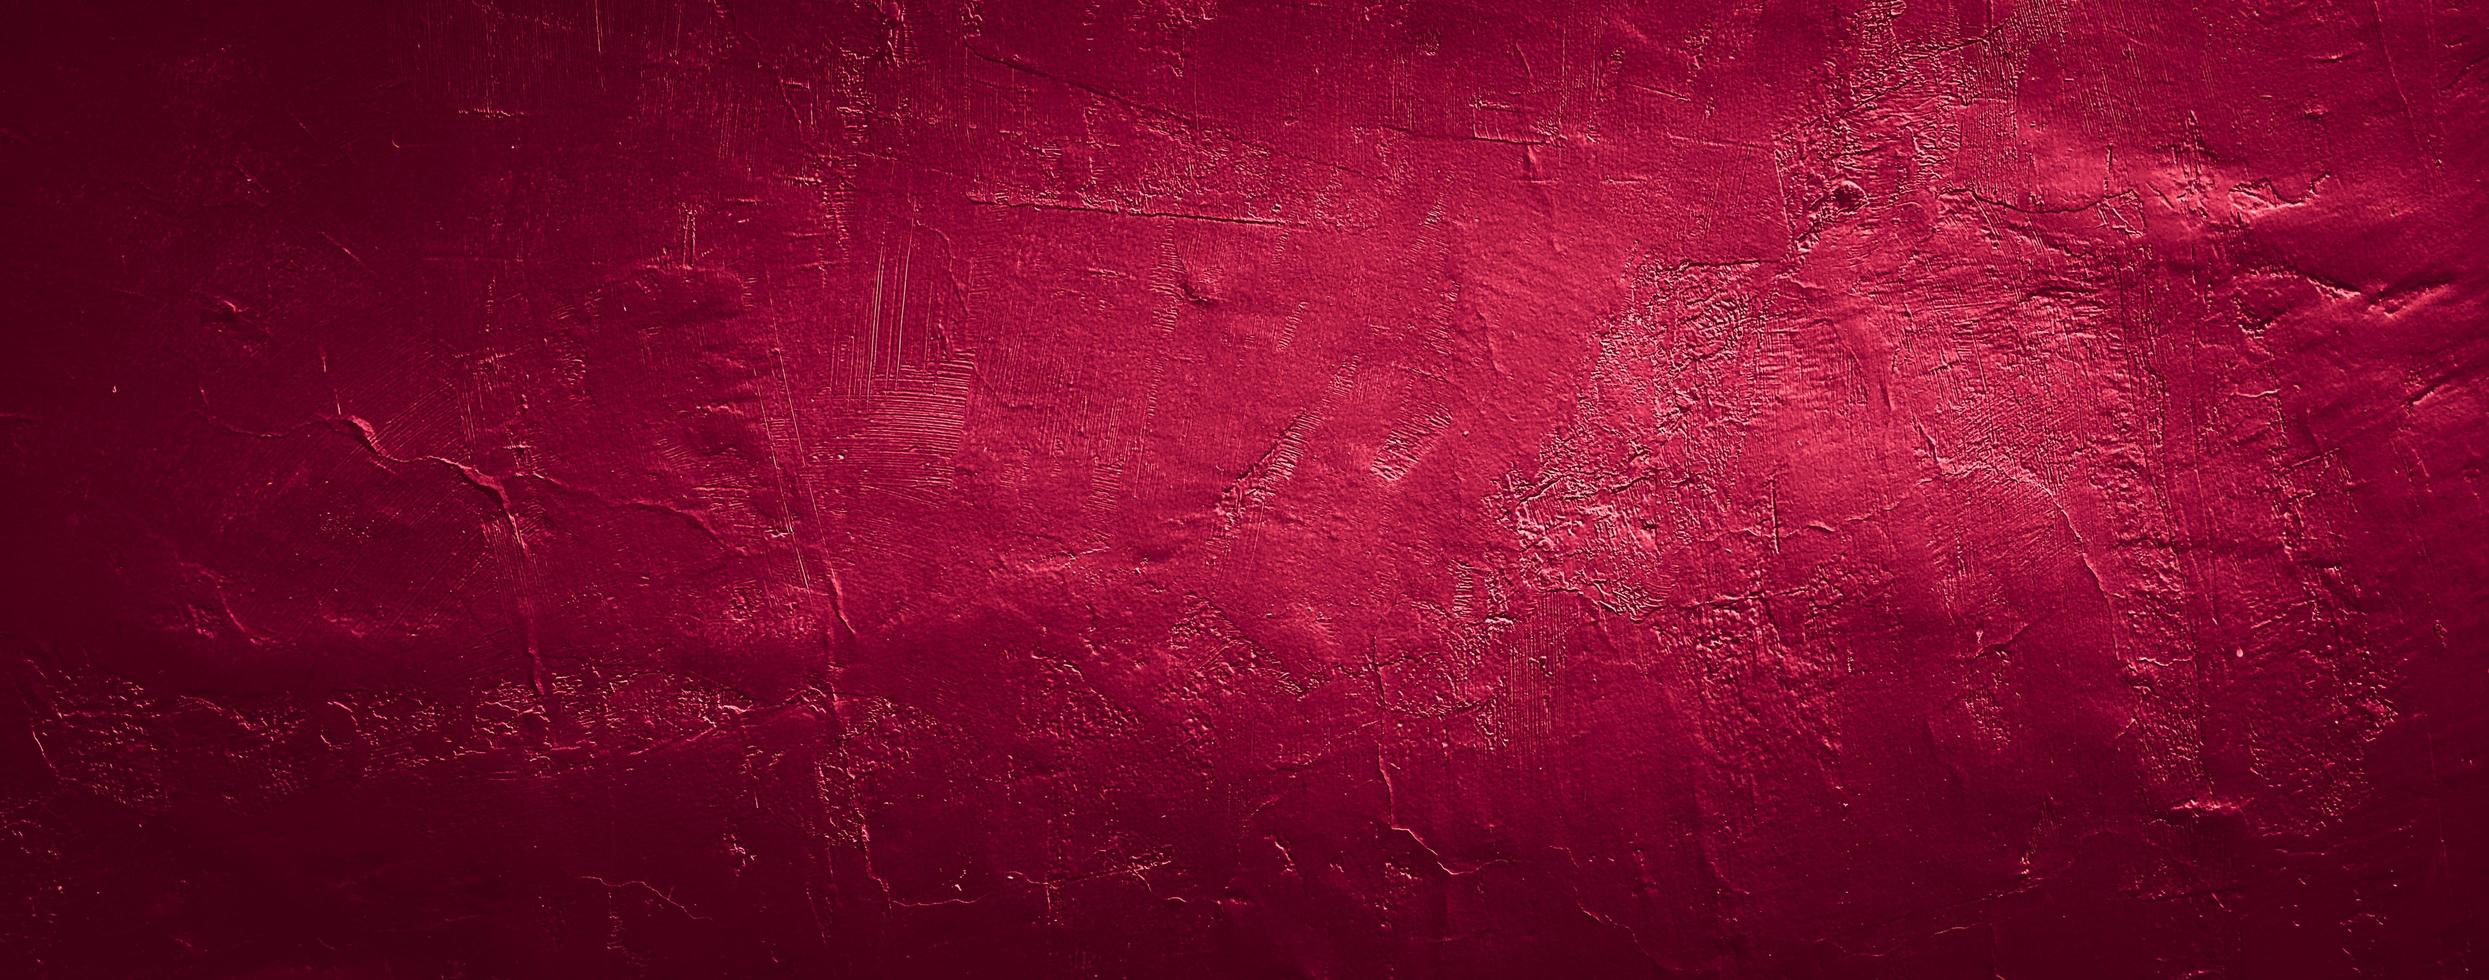 röd grungy abstrakt cement betongvägg textur bakgrund foto